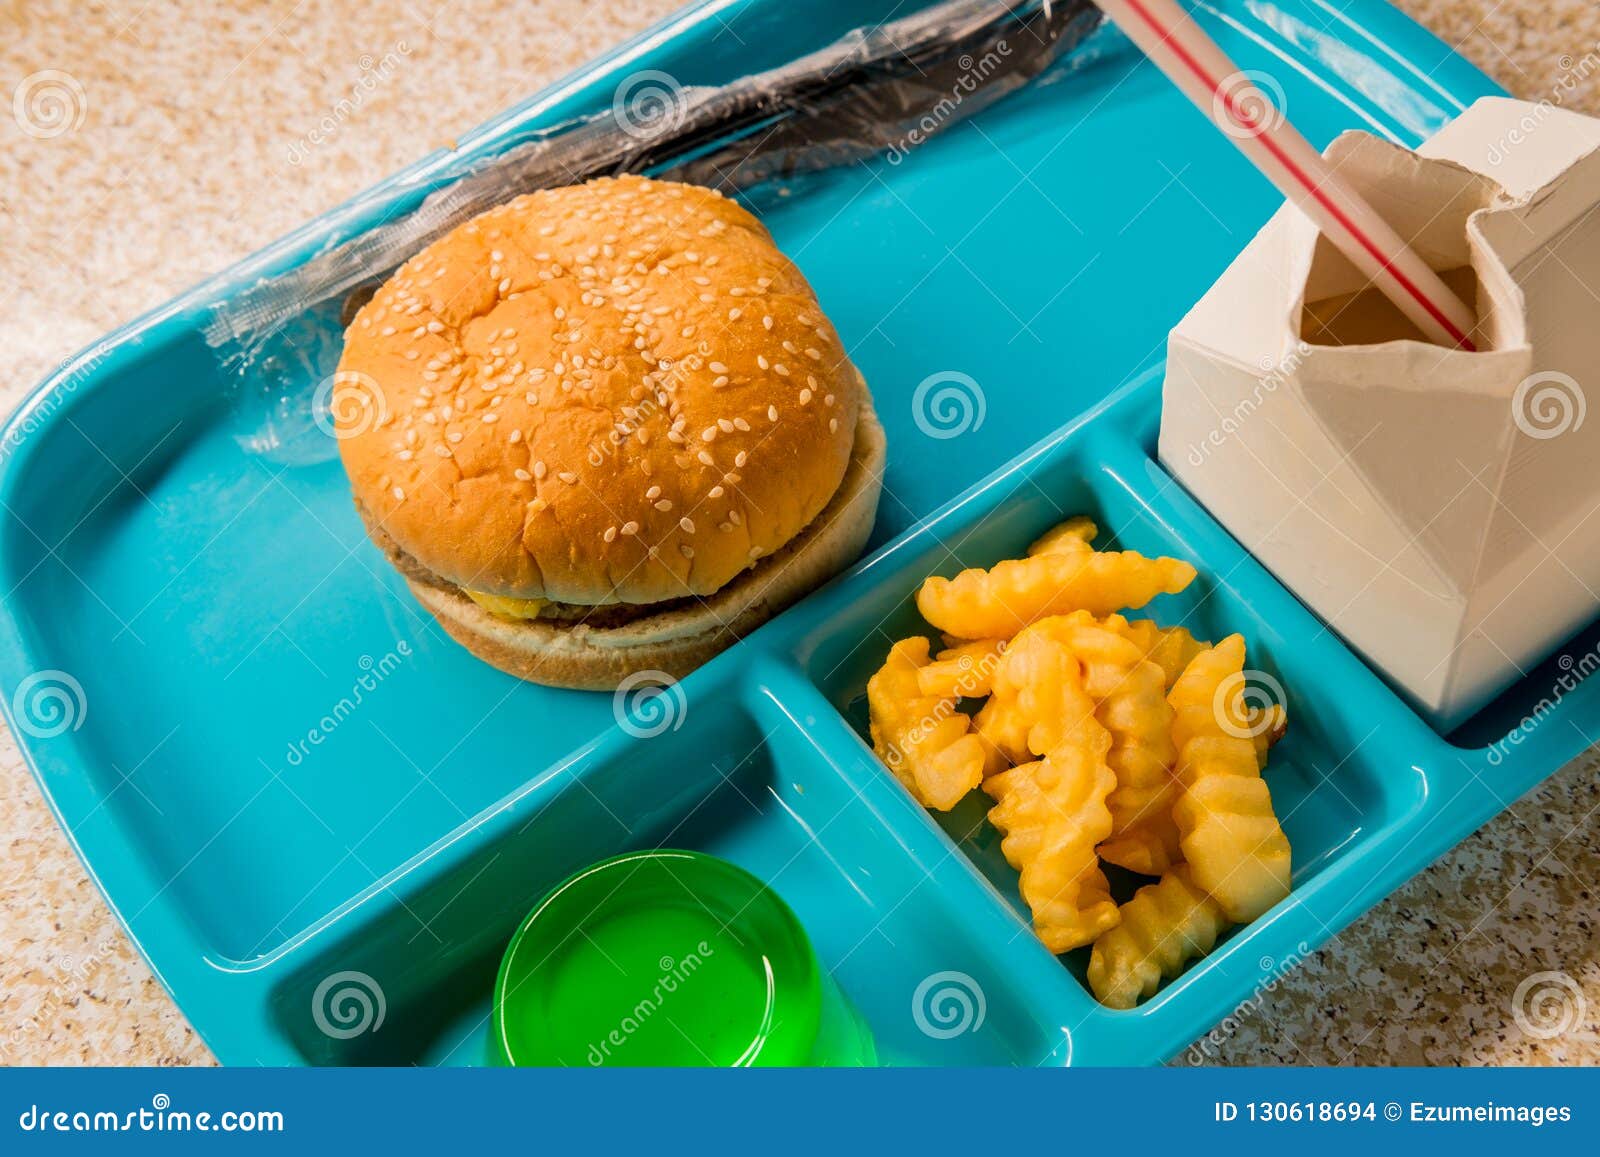 School Lunch Tray Cheeseburger Stock Photo - Image of gelatin